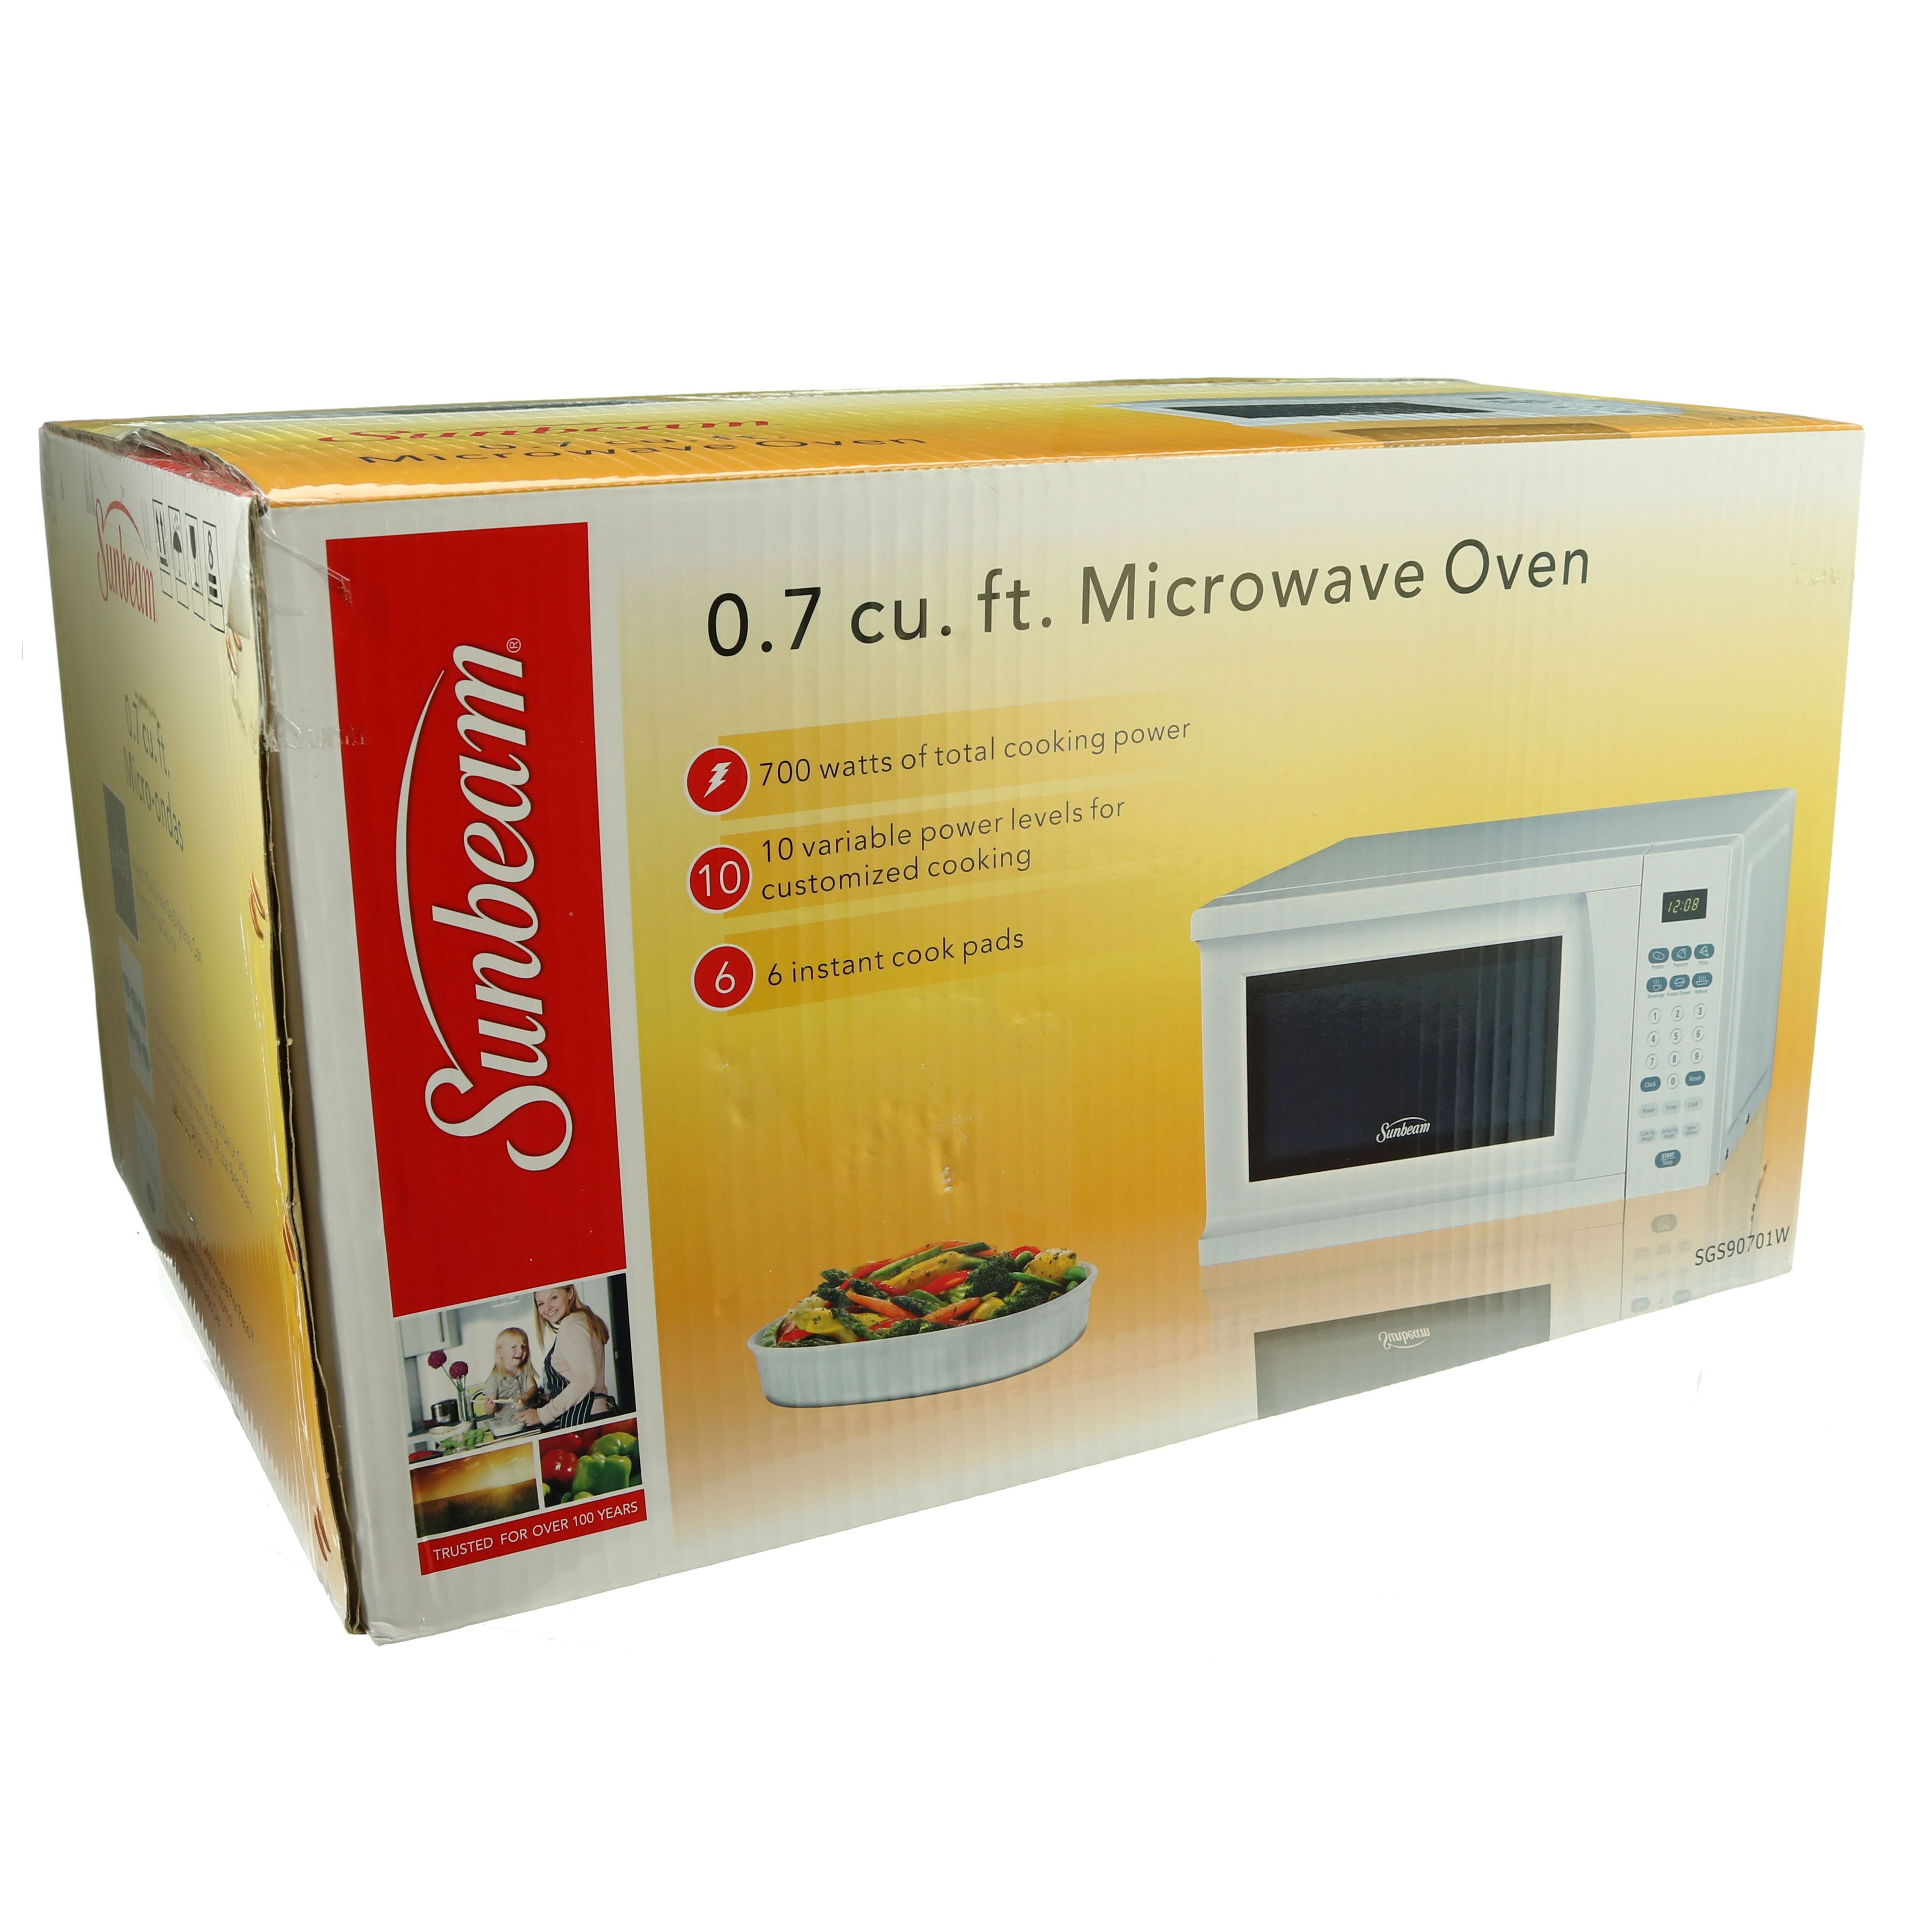 yellow microwave